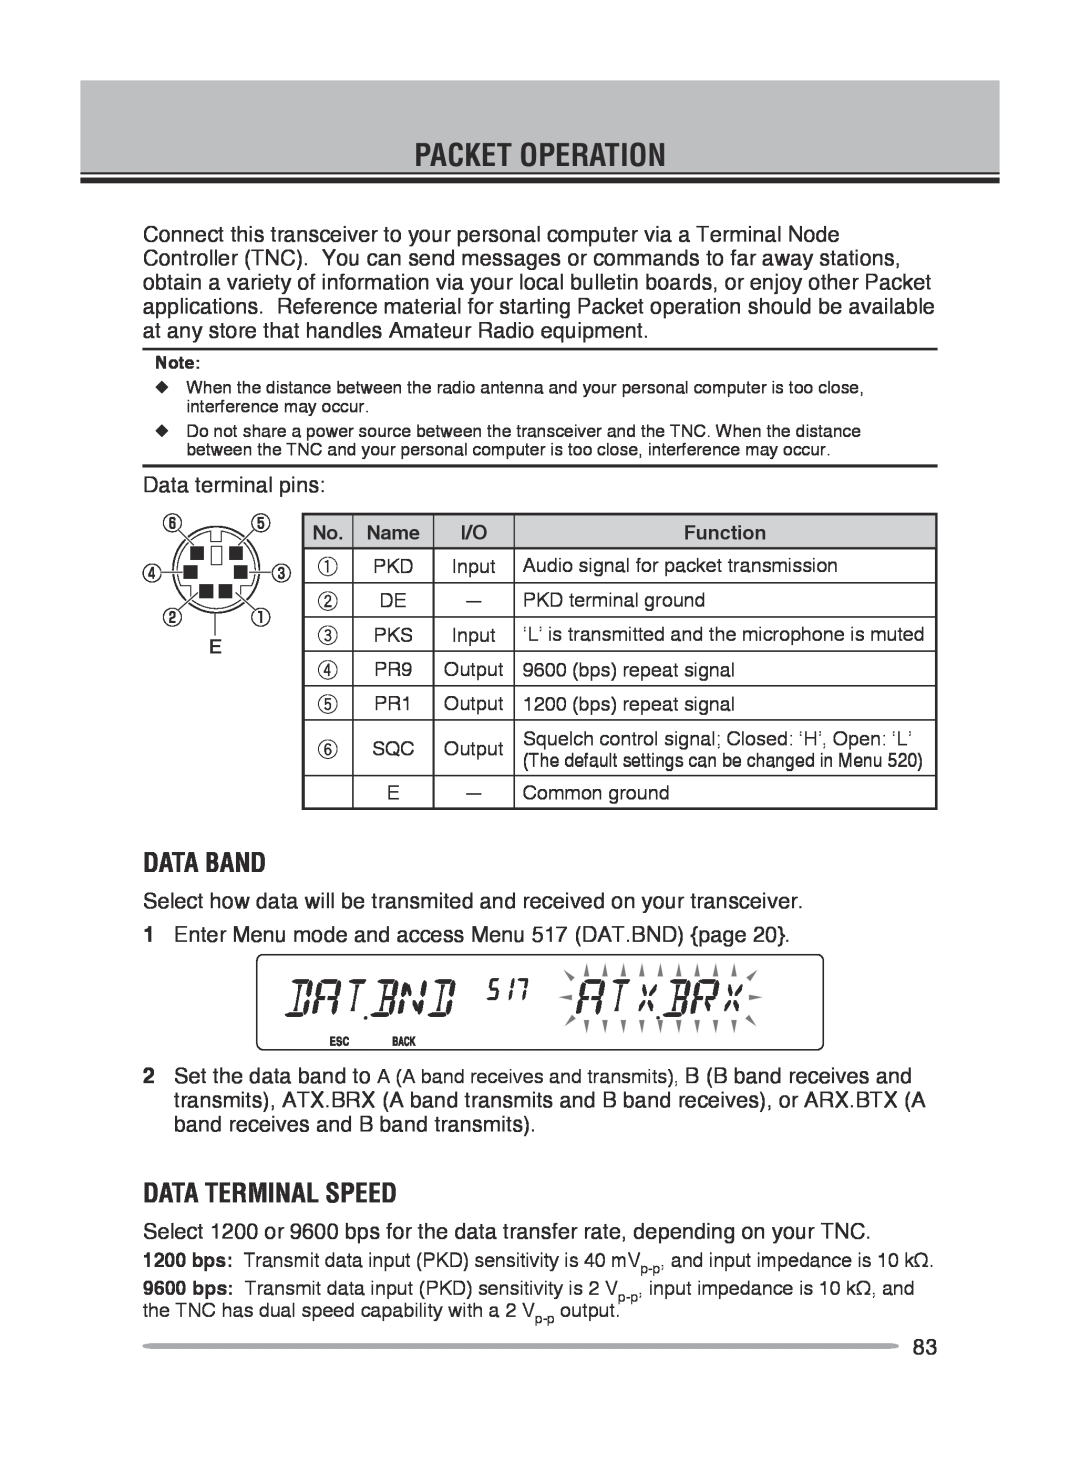 Kenwood TM-V71A, TM-V71E instruction manual Packet Operation, Data Band, Data Terminal Speed 